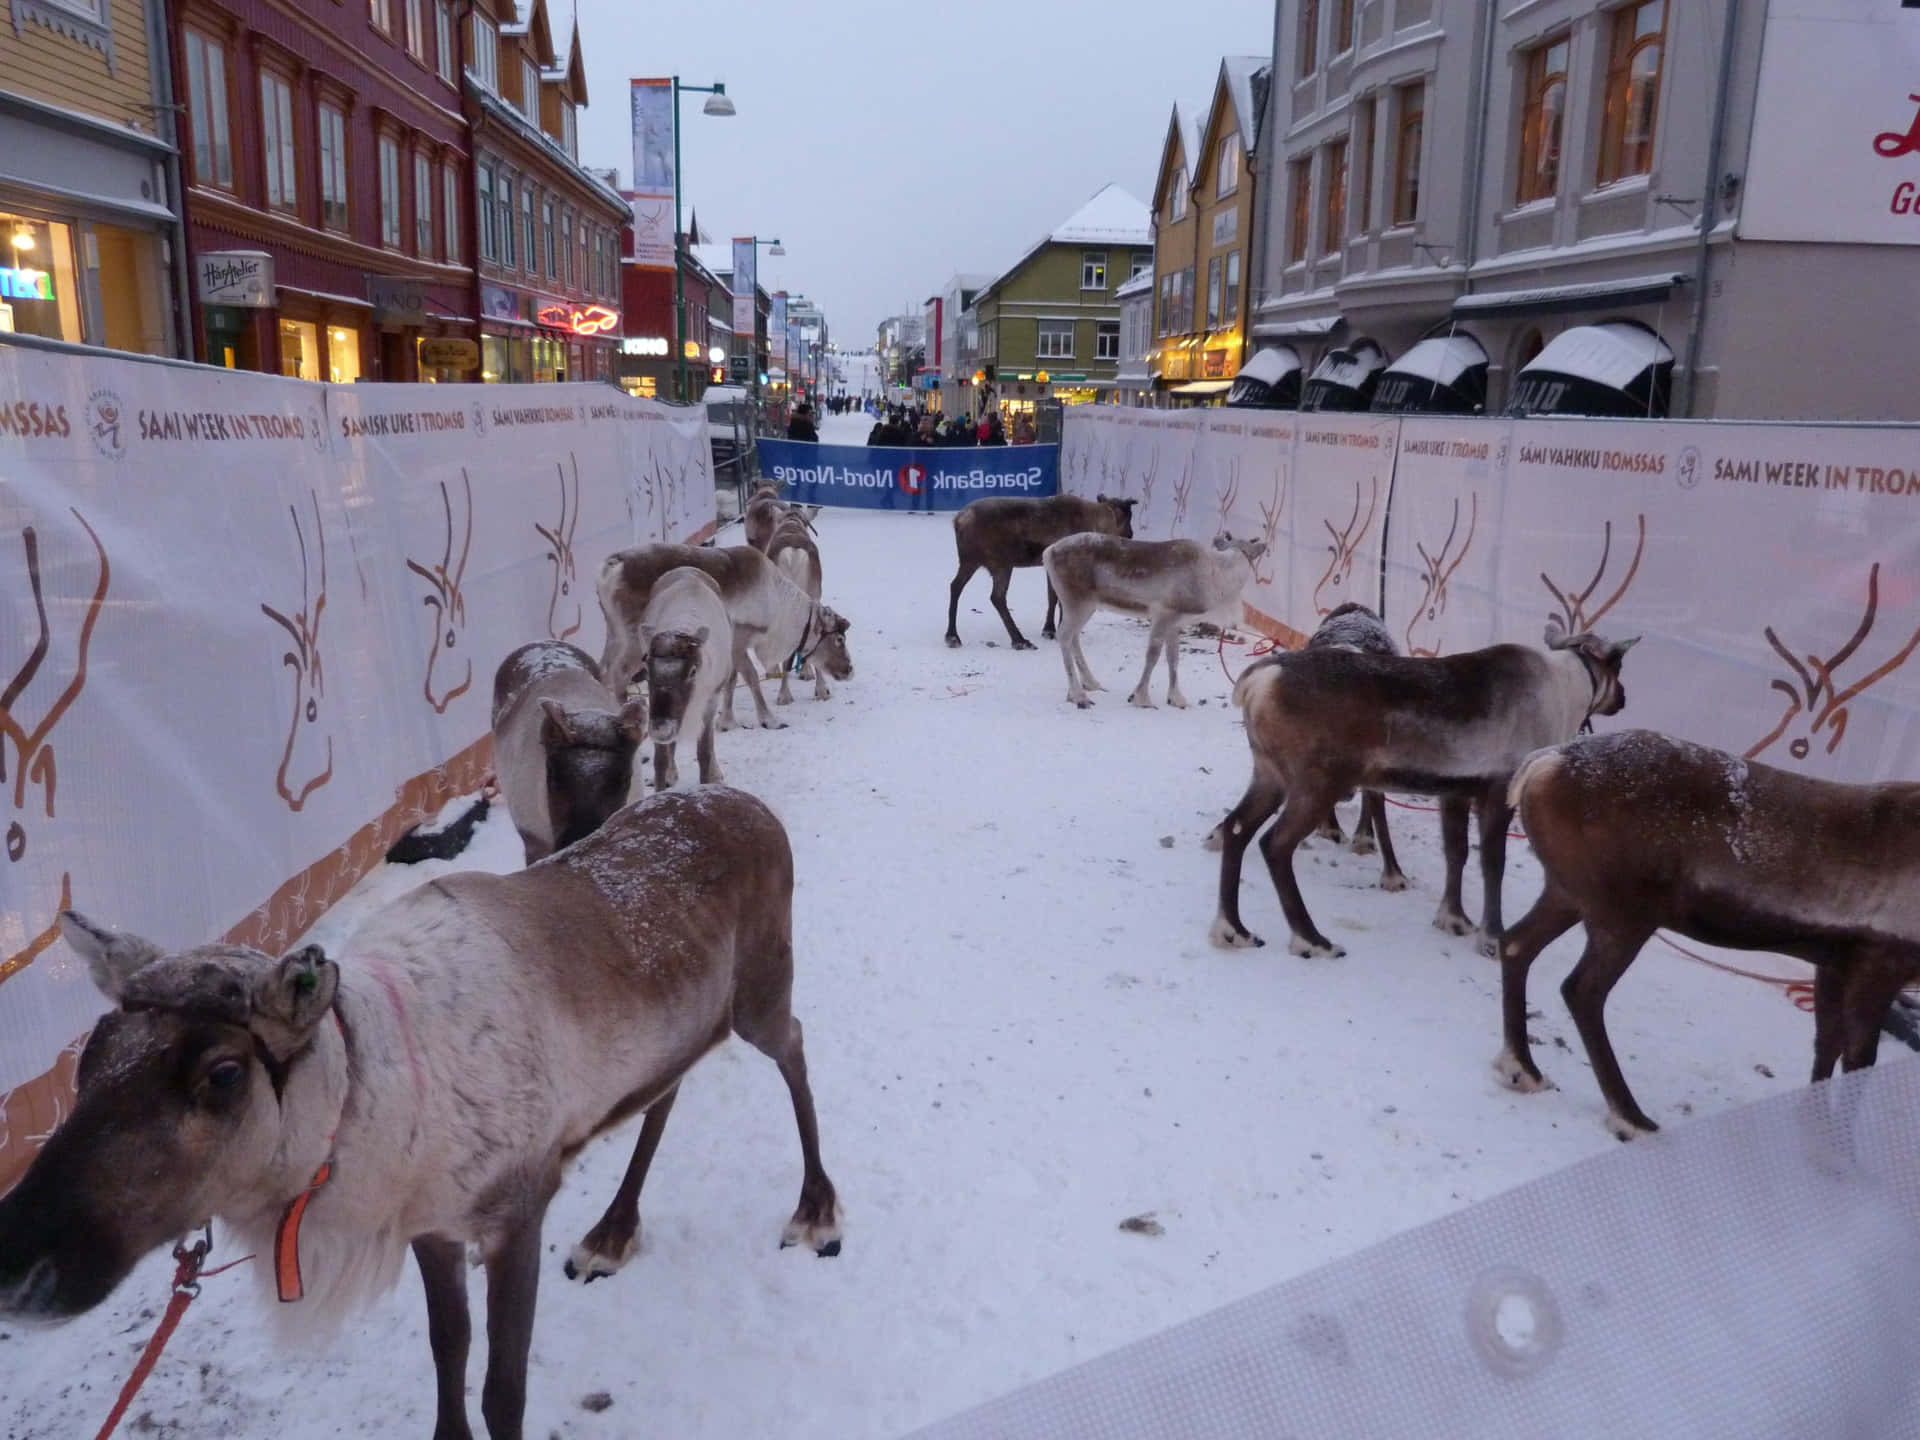 Reindeerin Tromso City Center Wallpaper